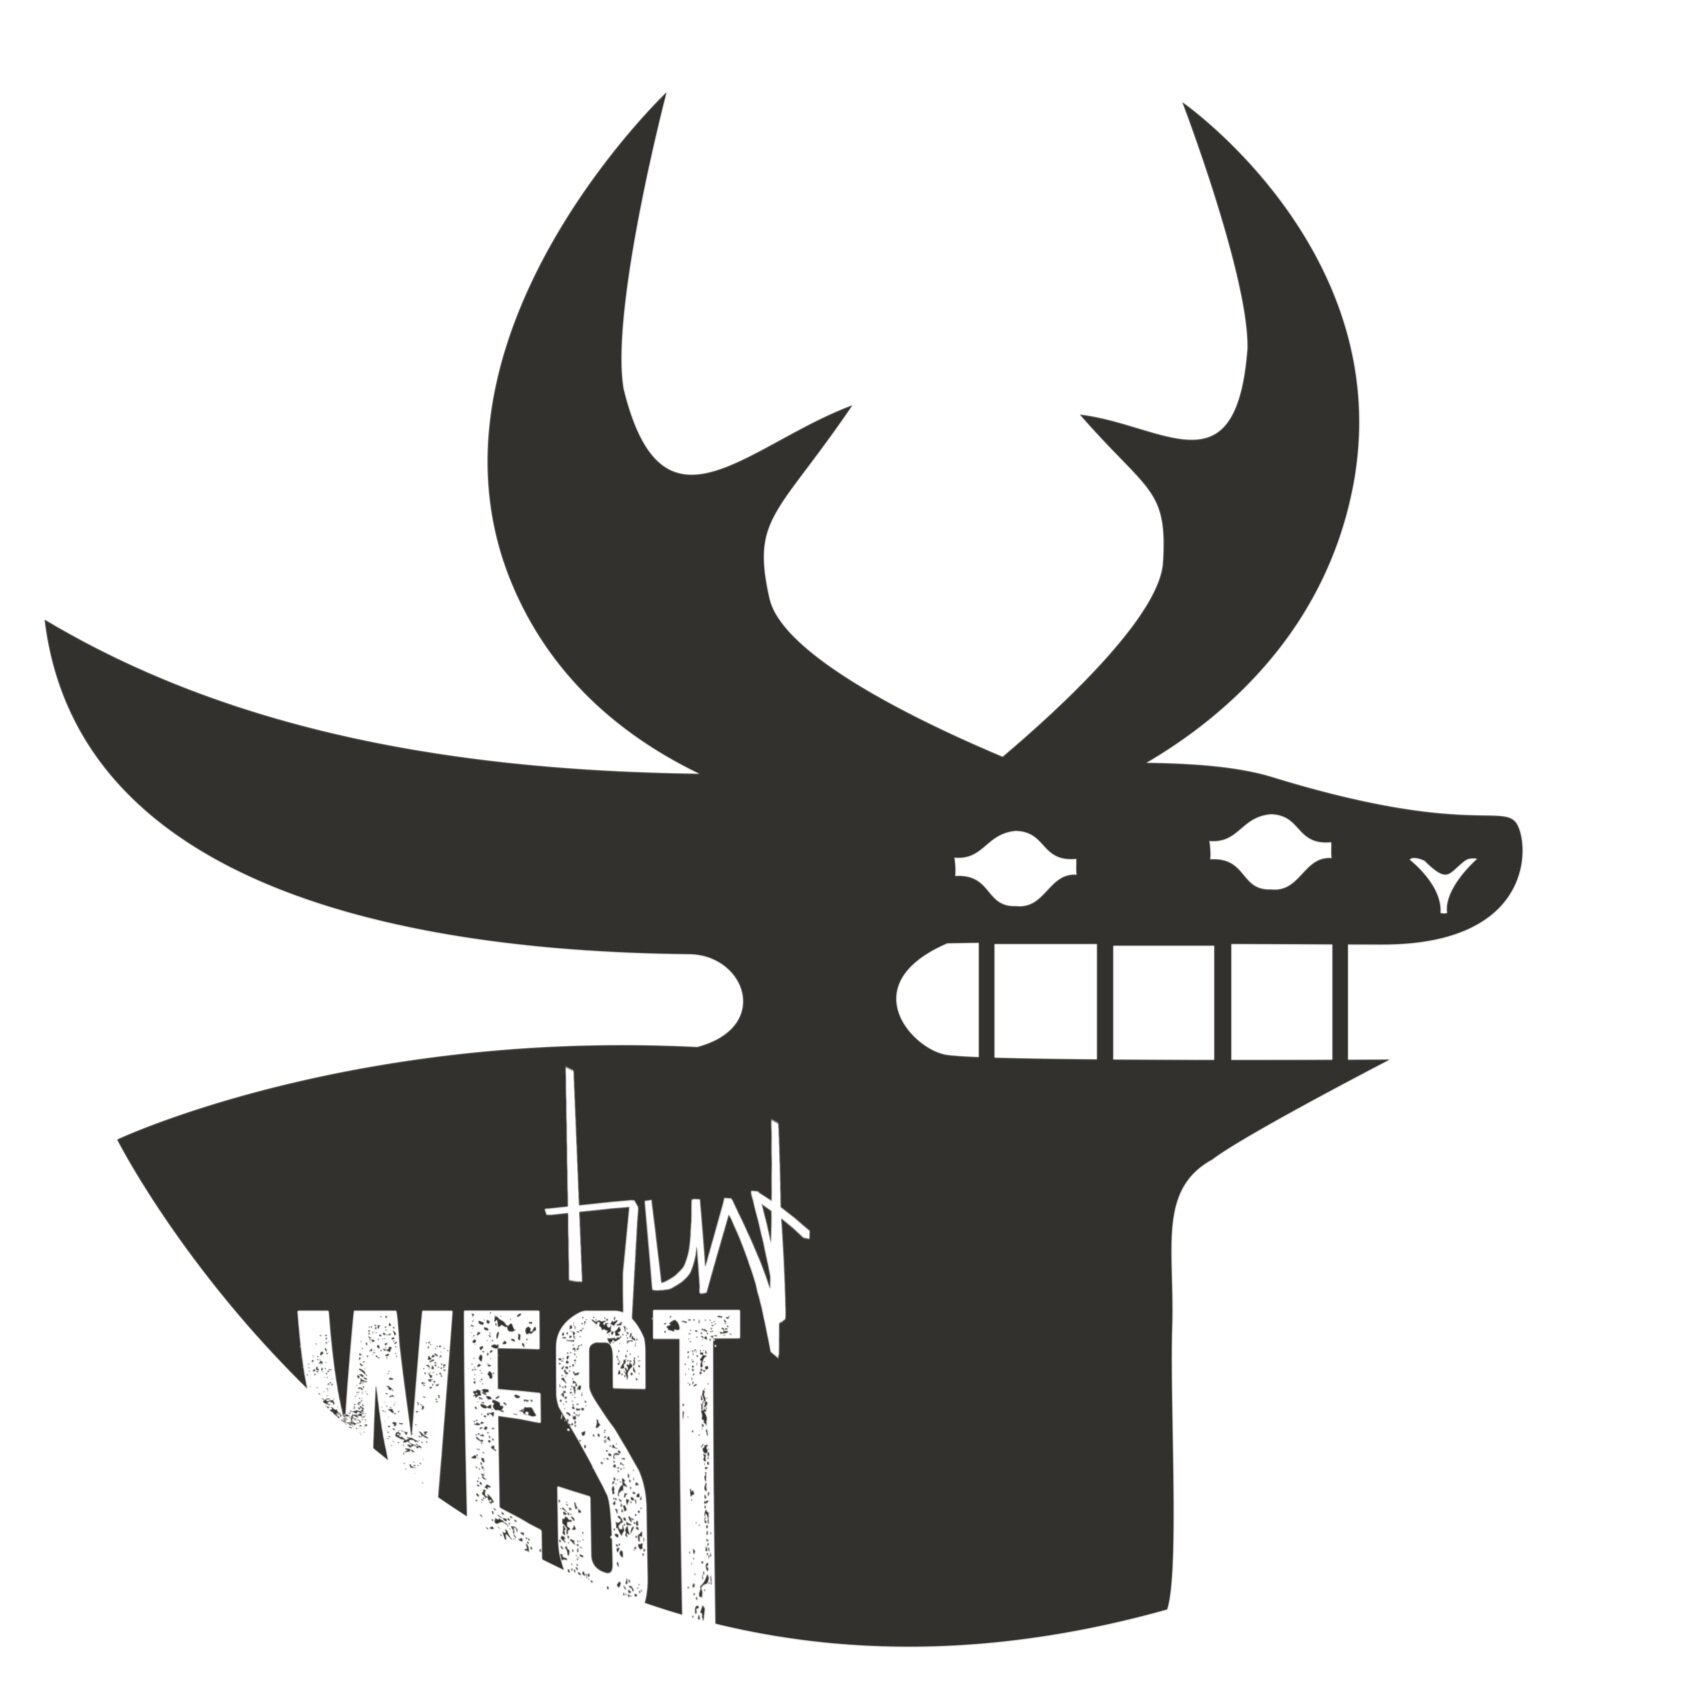 Hunt West Logo (Copy)